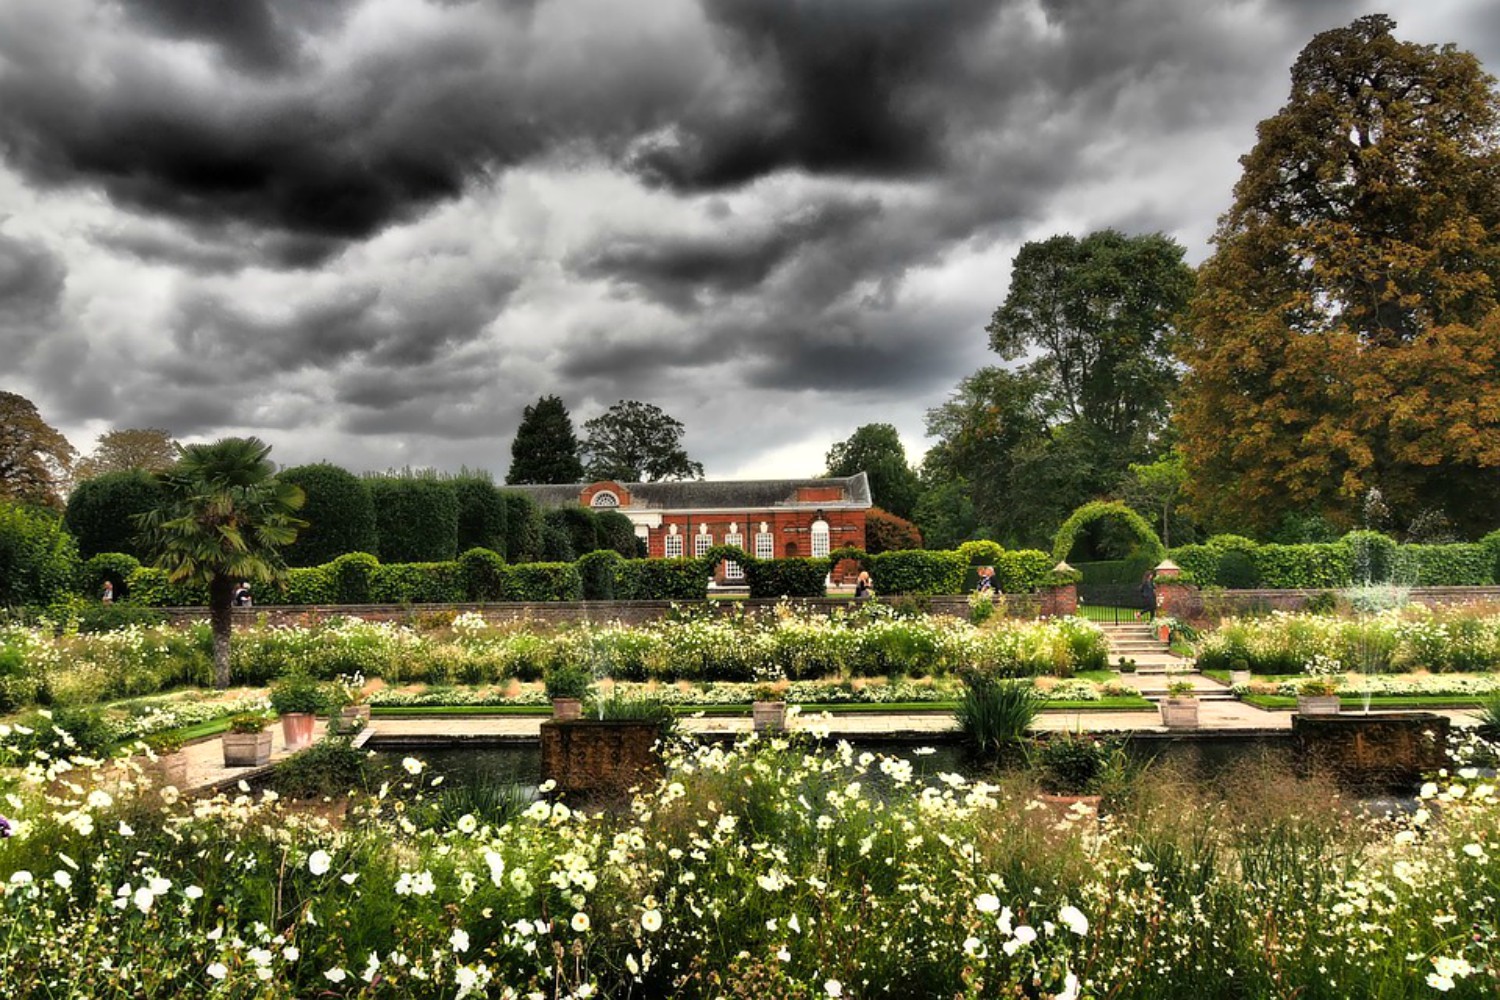 The Sunken Garden, Kensington Palace